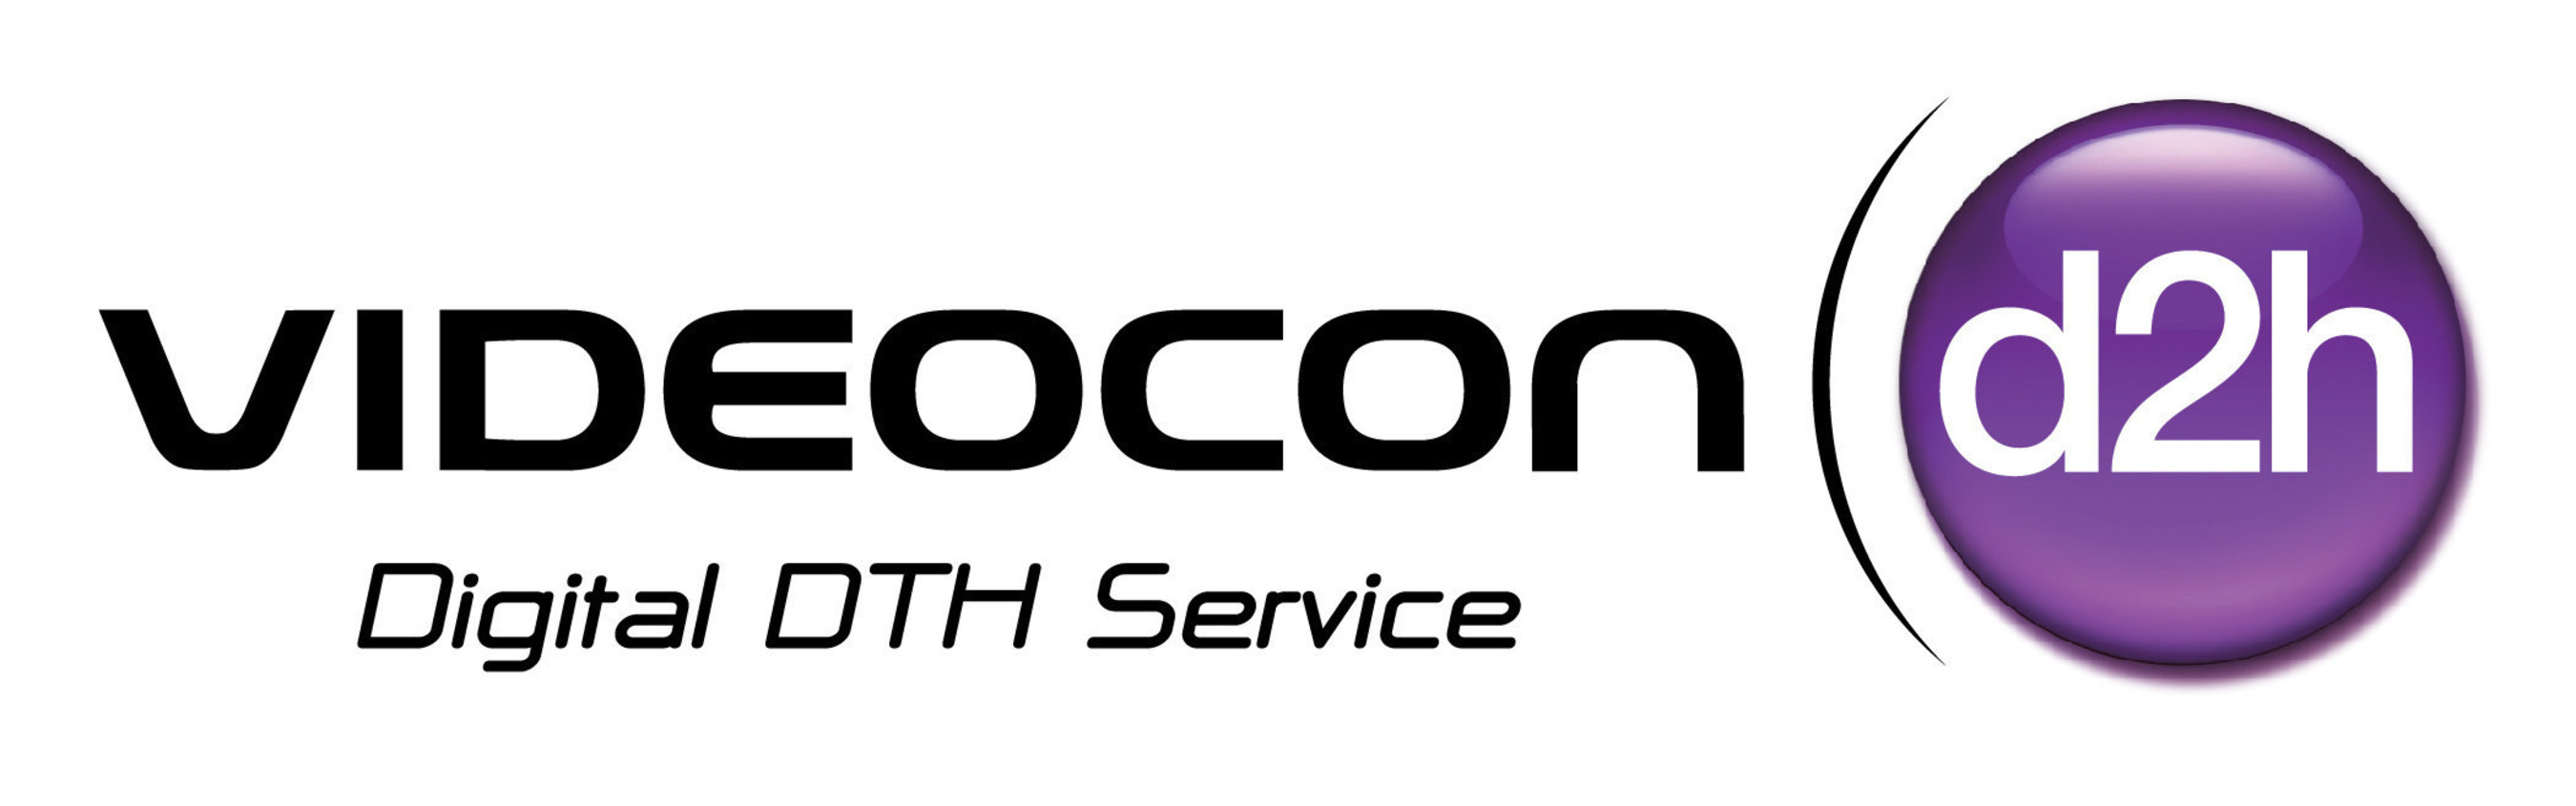 Videocon d2h Logo